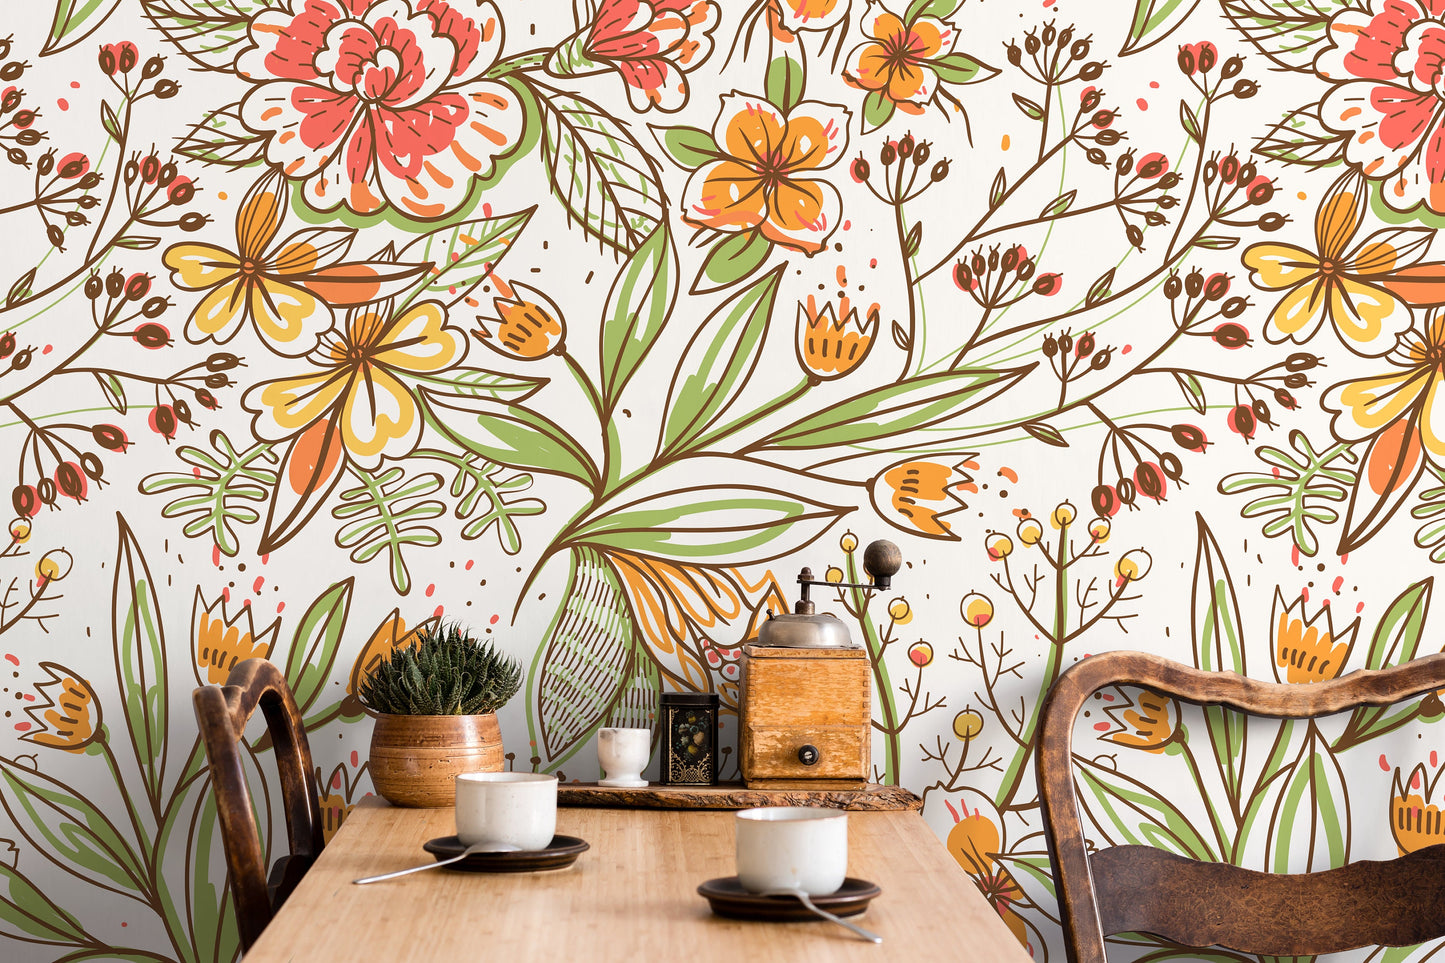 Floral Garden Hand Drawing Wallpaper / Peel and Stick Wallpaper Removable Wallpaper Home Decor Wall Art Wall Decor Room Decor - D141